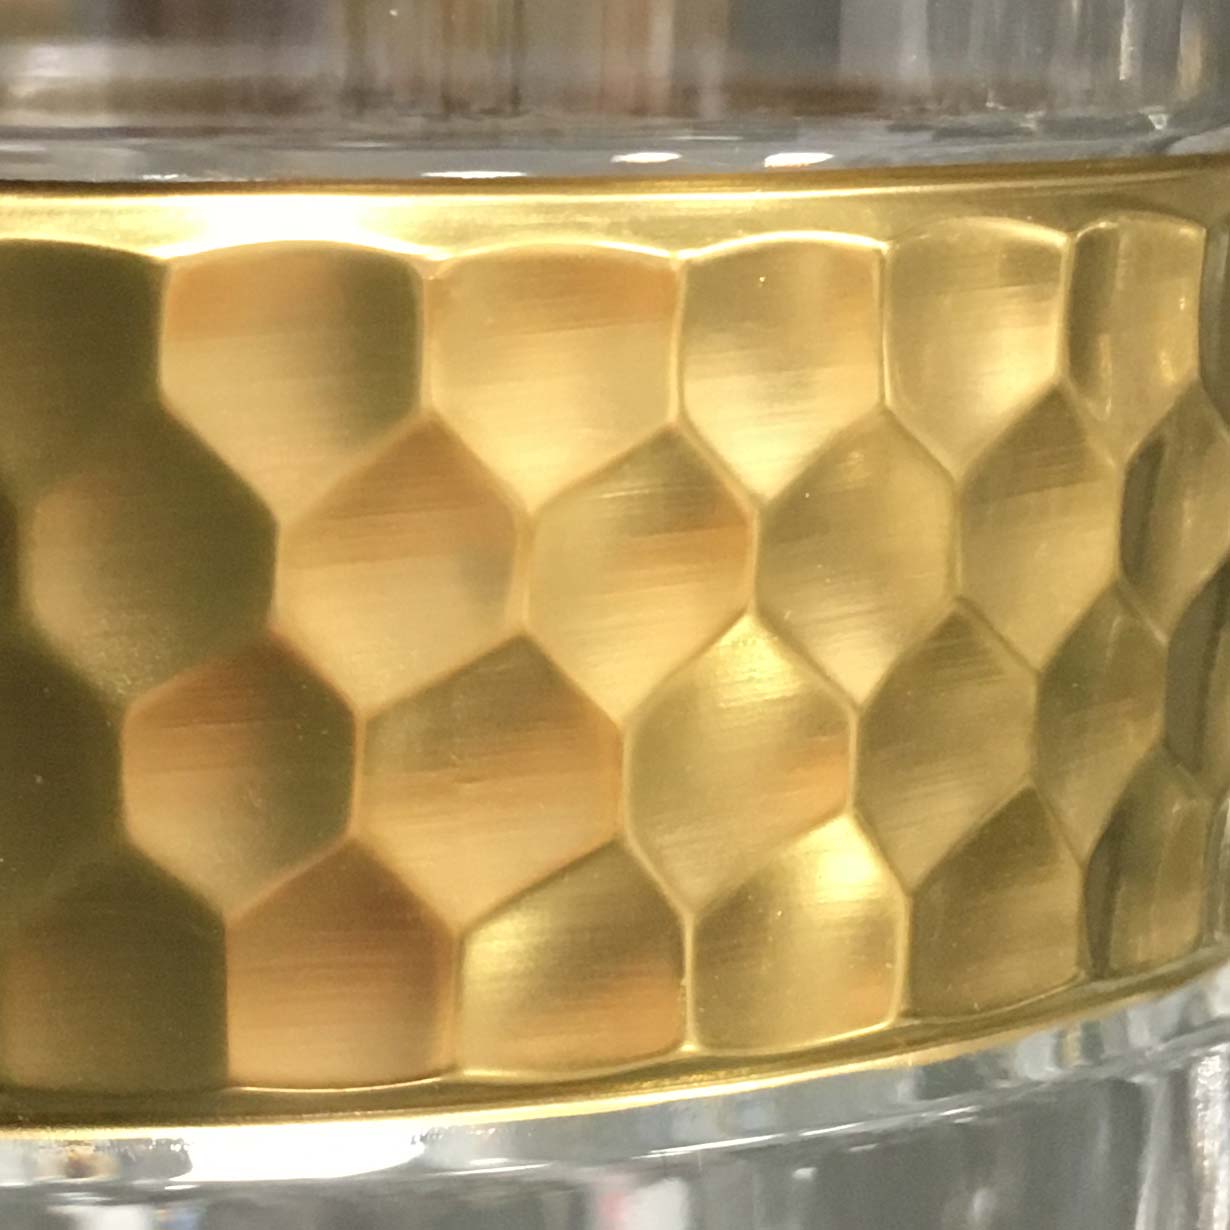 Longdrinkglas Kristall Bloom Gold clear (13,5 cm)